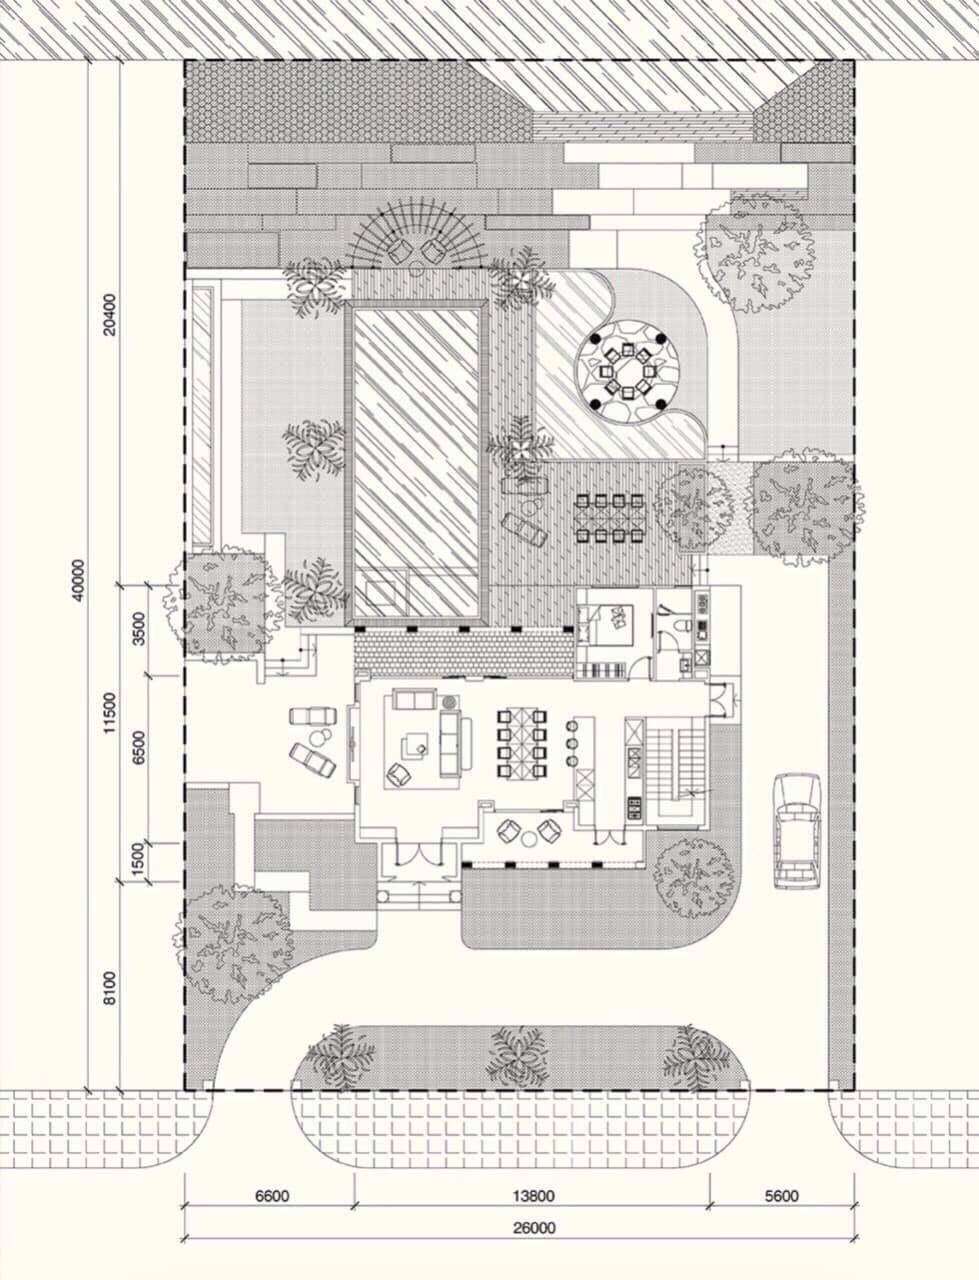 dự án saigon garden riverside village - thiết kế biệt thự